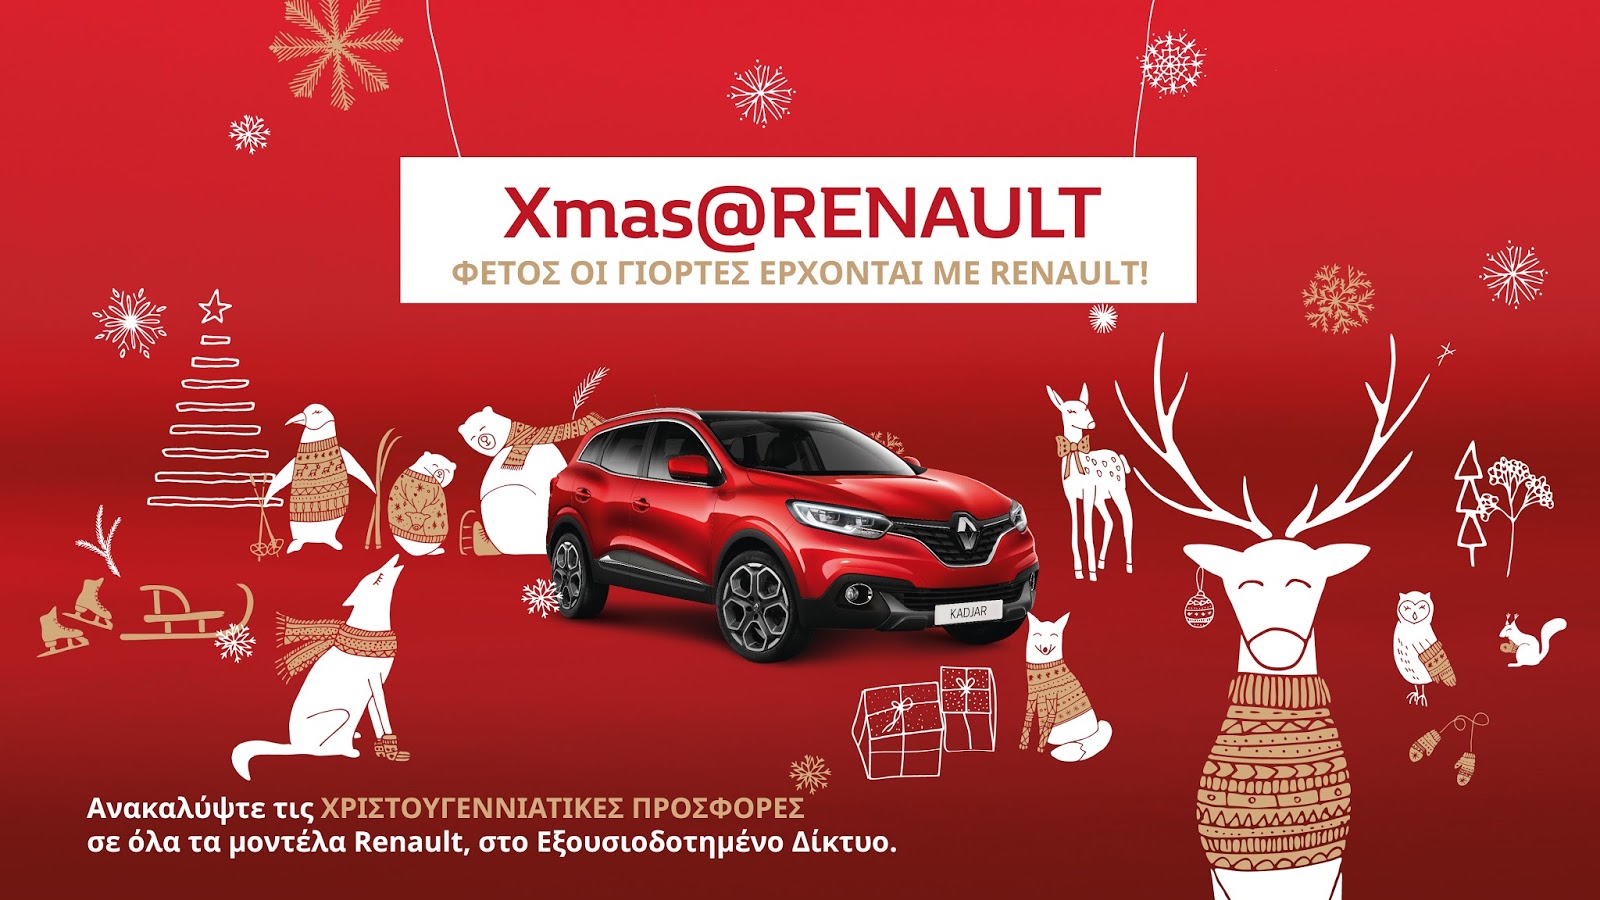 Xmas2540Renault Χριστουγεννιάτικες προσφορές από την Renault